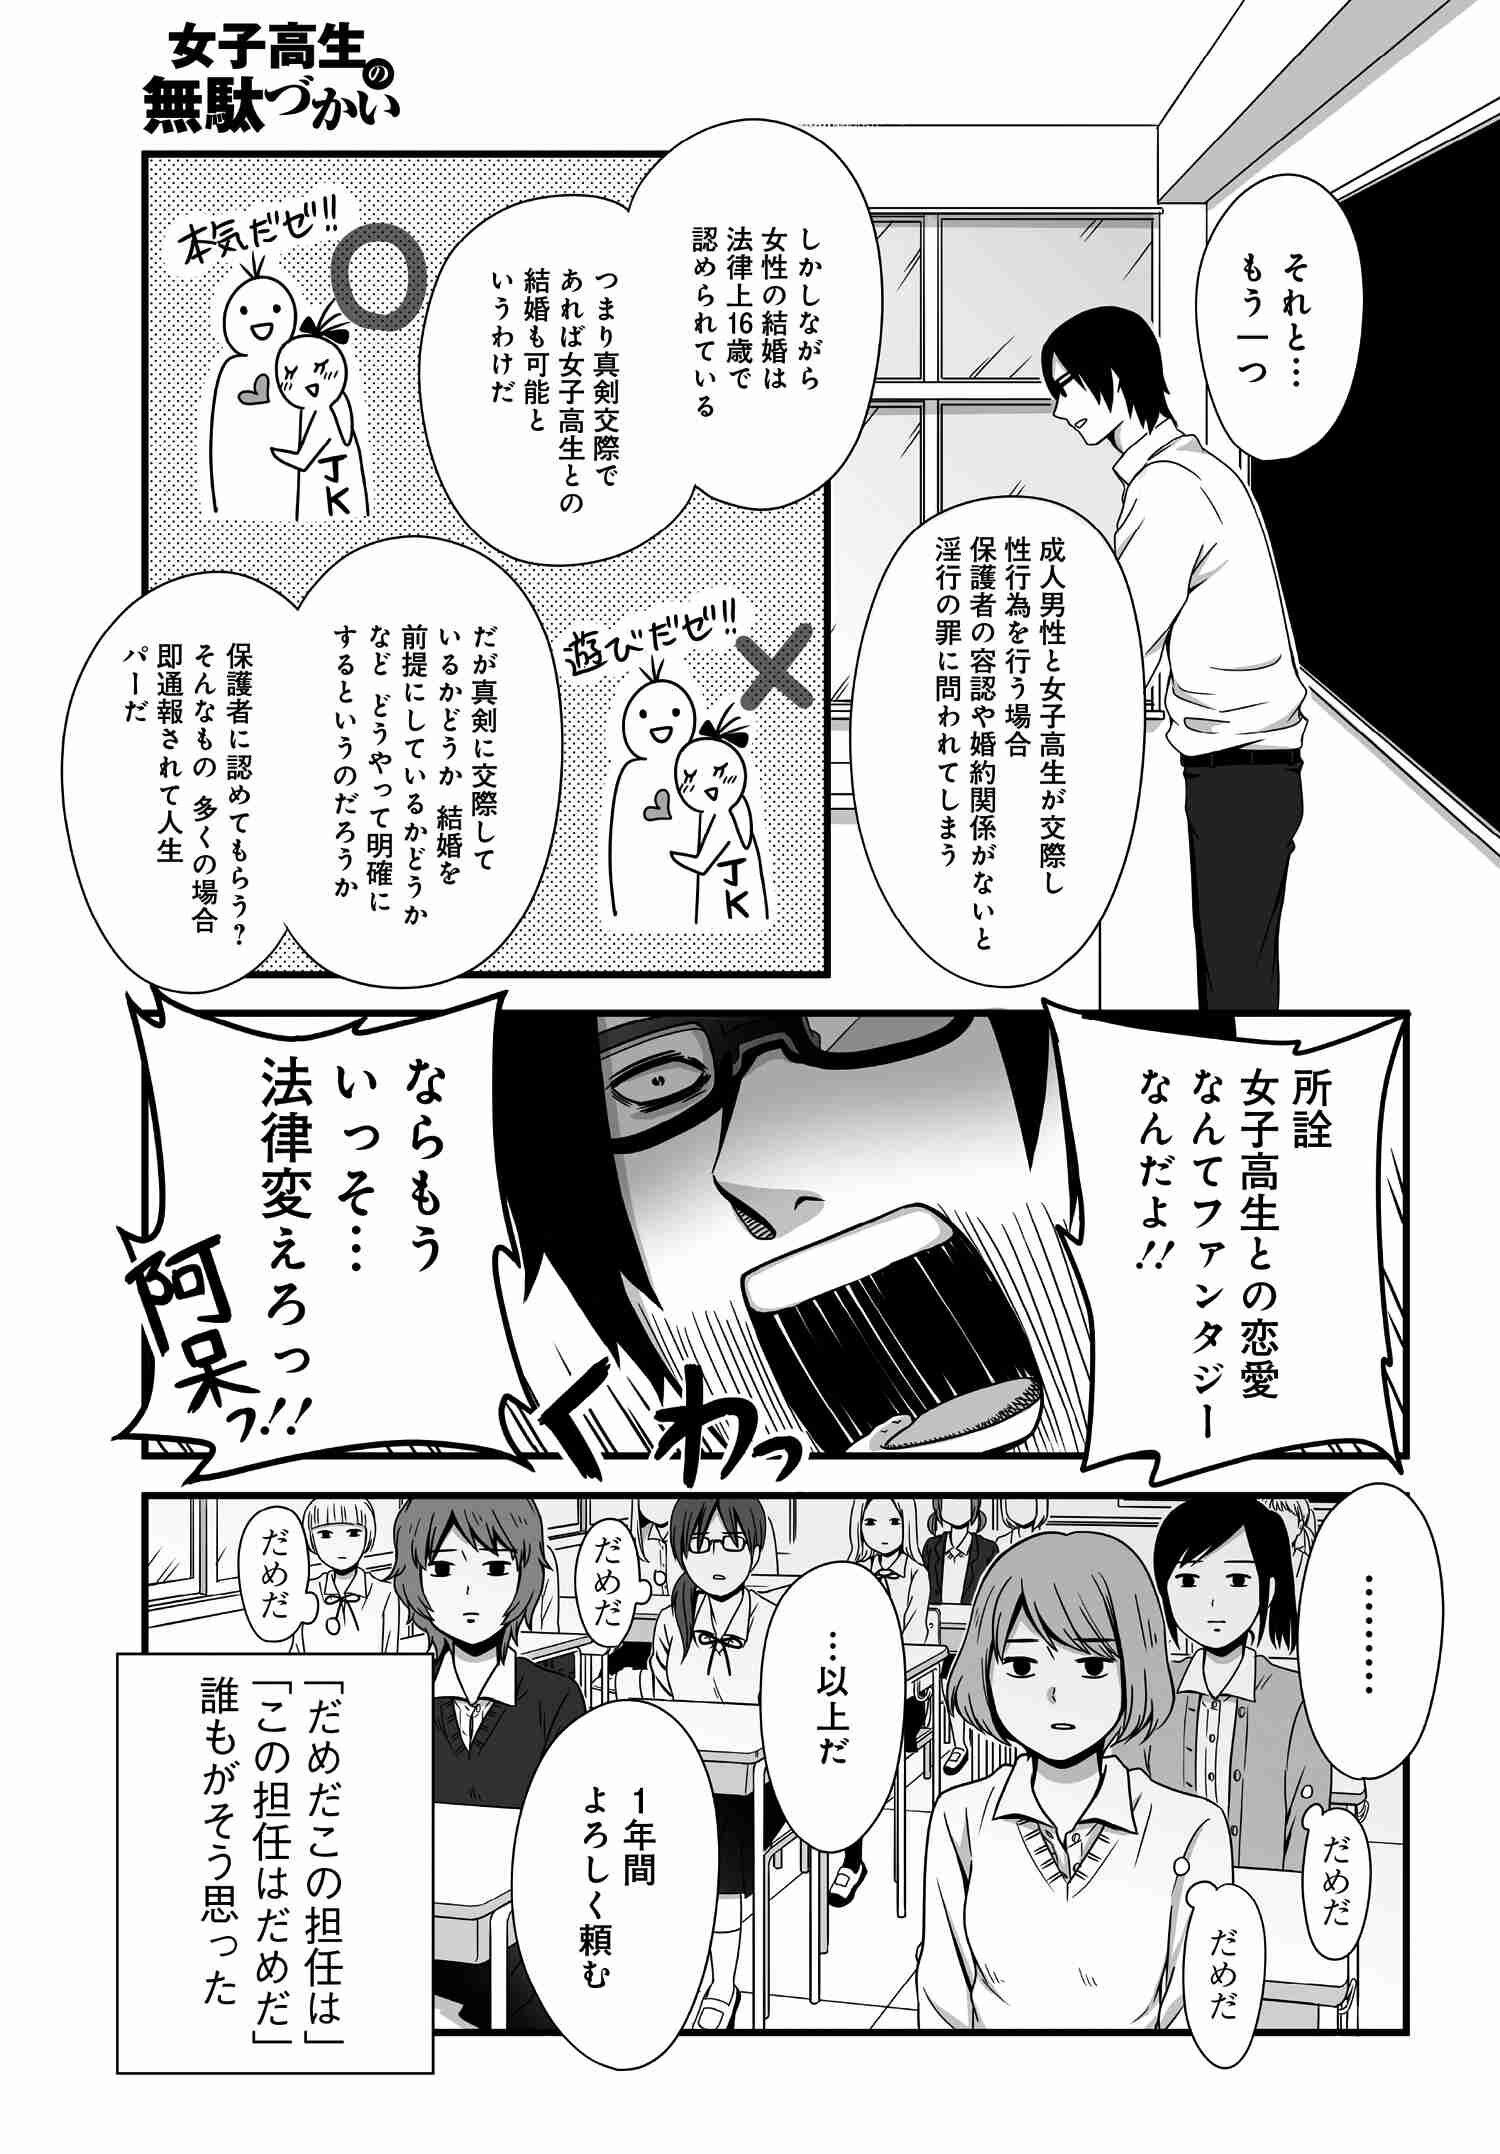 Joshikousei no Mudazukai - Chapter 009 - Page 3